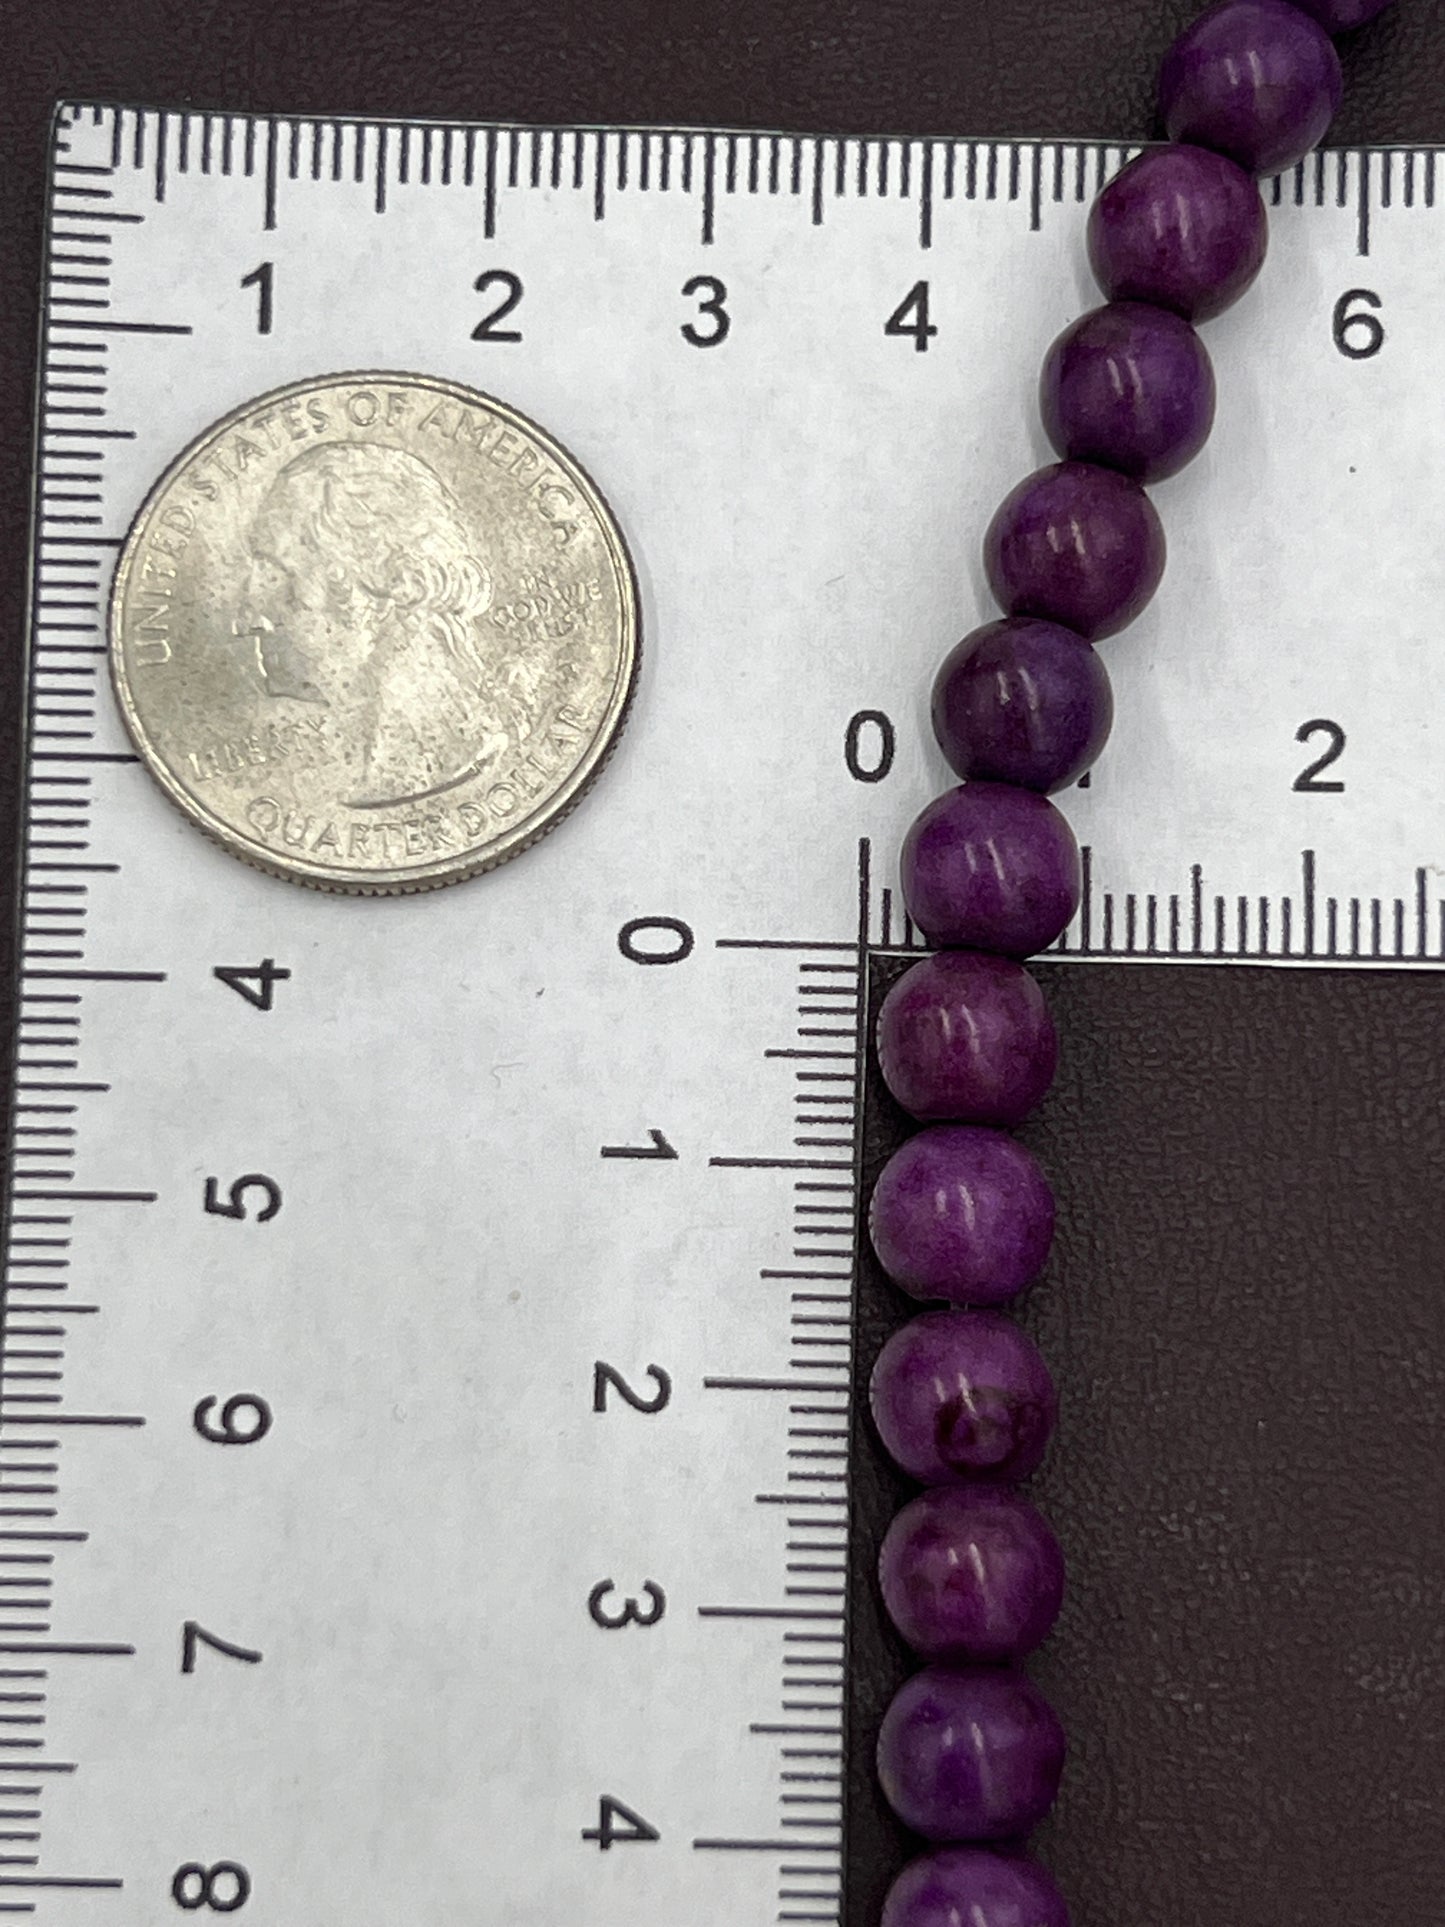 8mm Purple Dyed Magnesite 1 Strand (40cm)